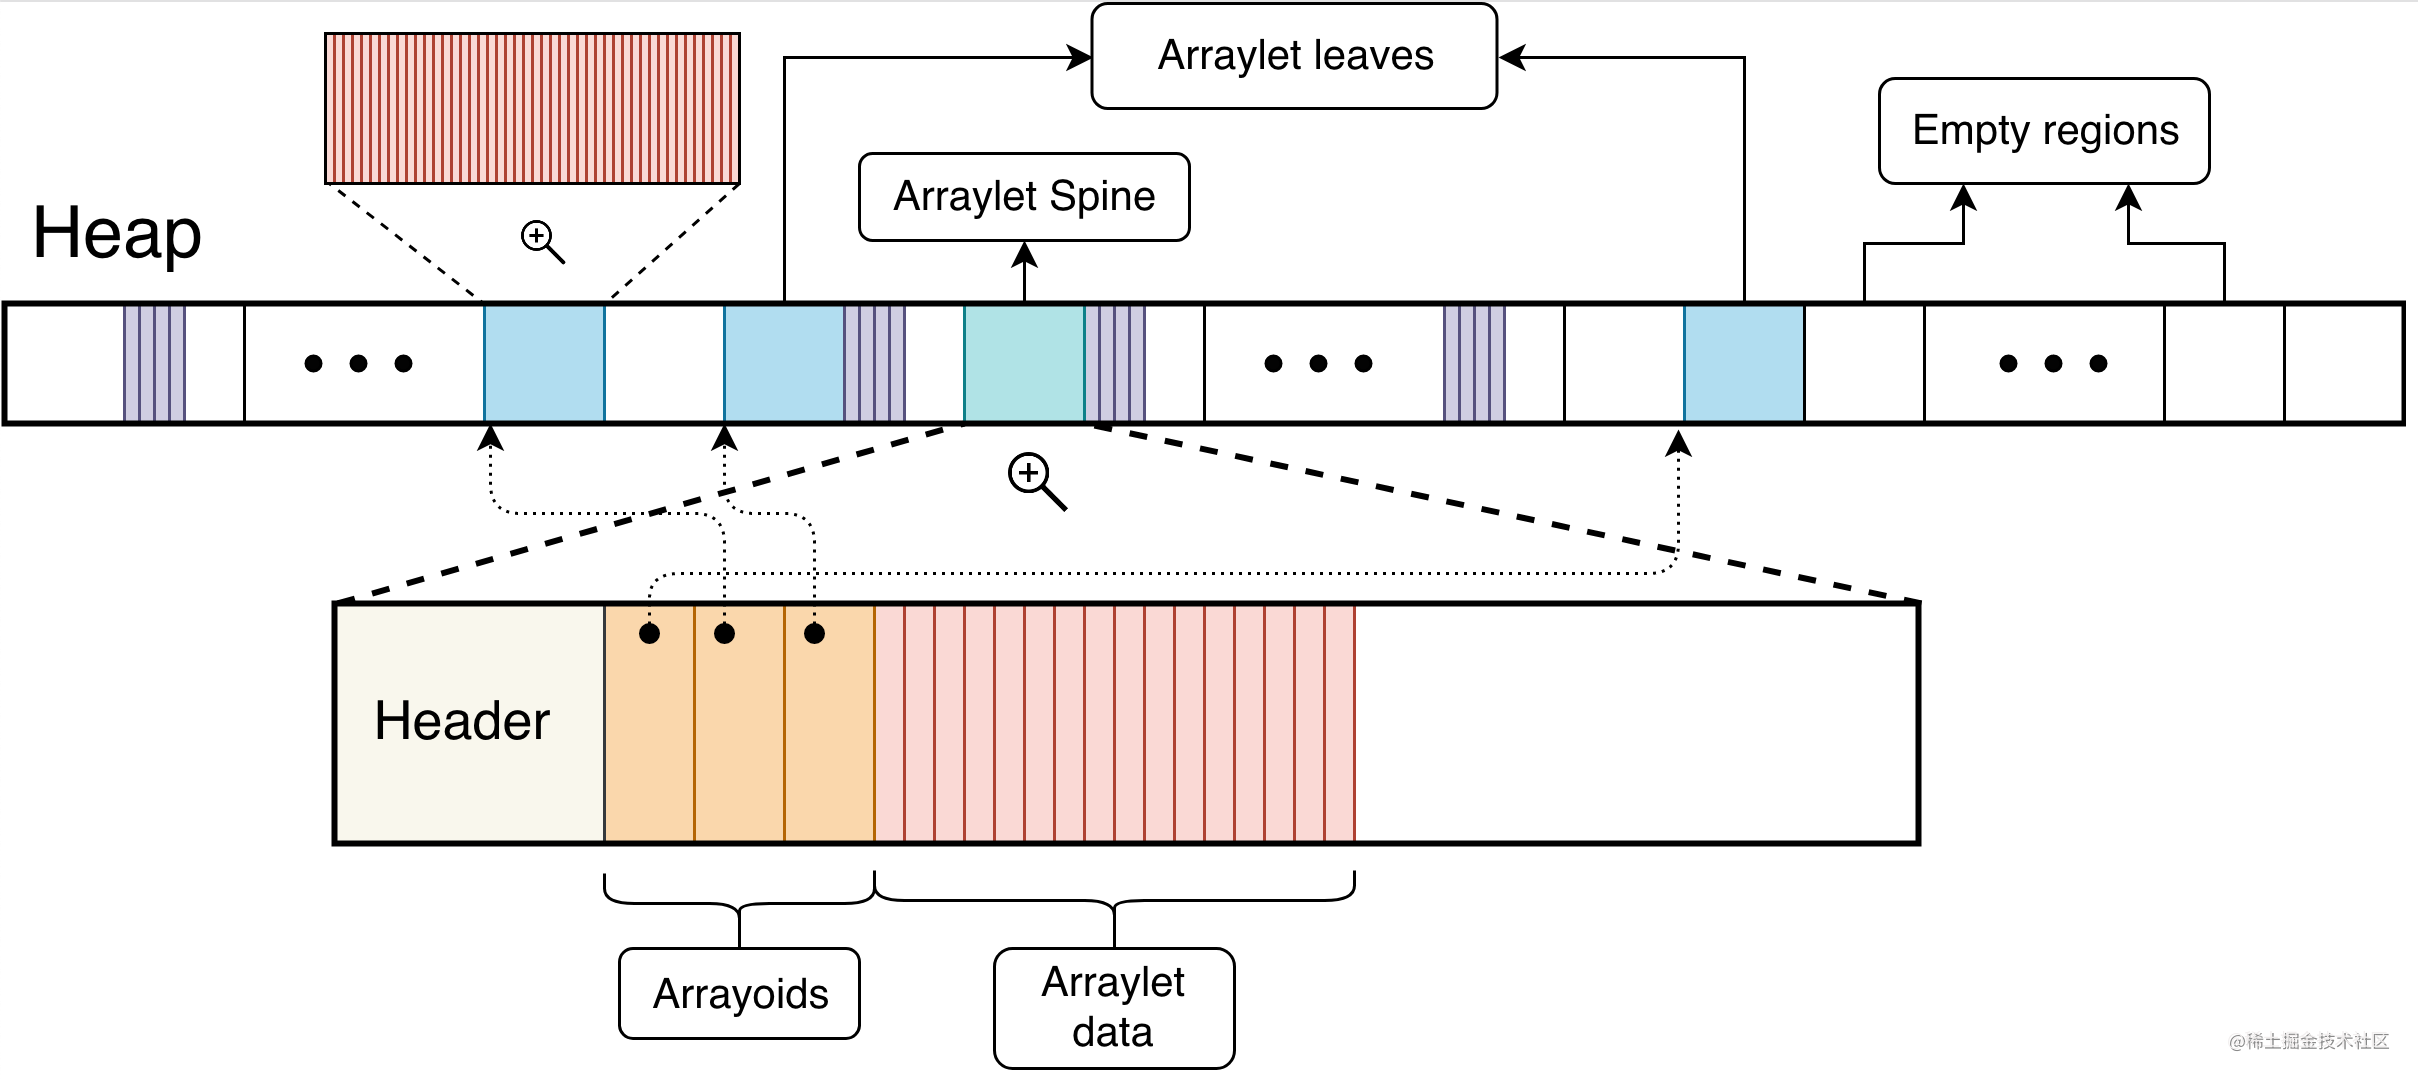 arraylet_diagram1.png